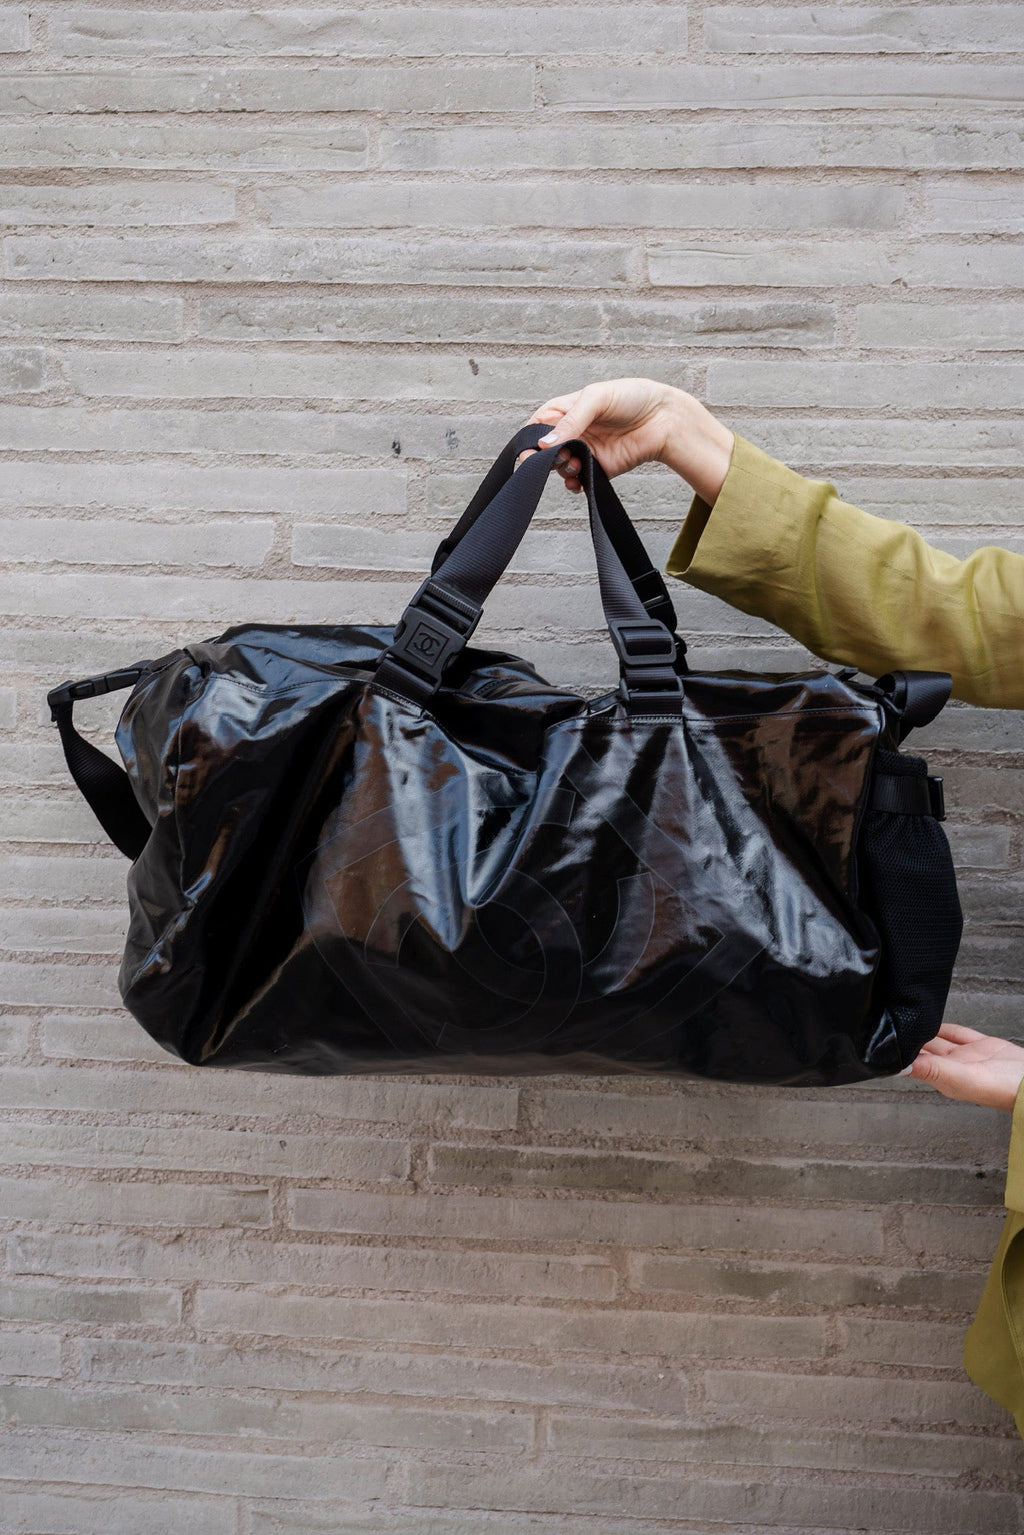 CHANEL Black Duffle Bags & Handbags for Women